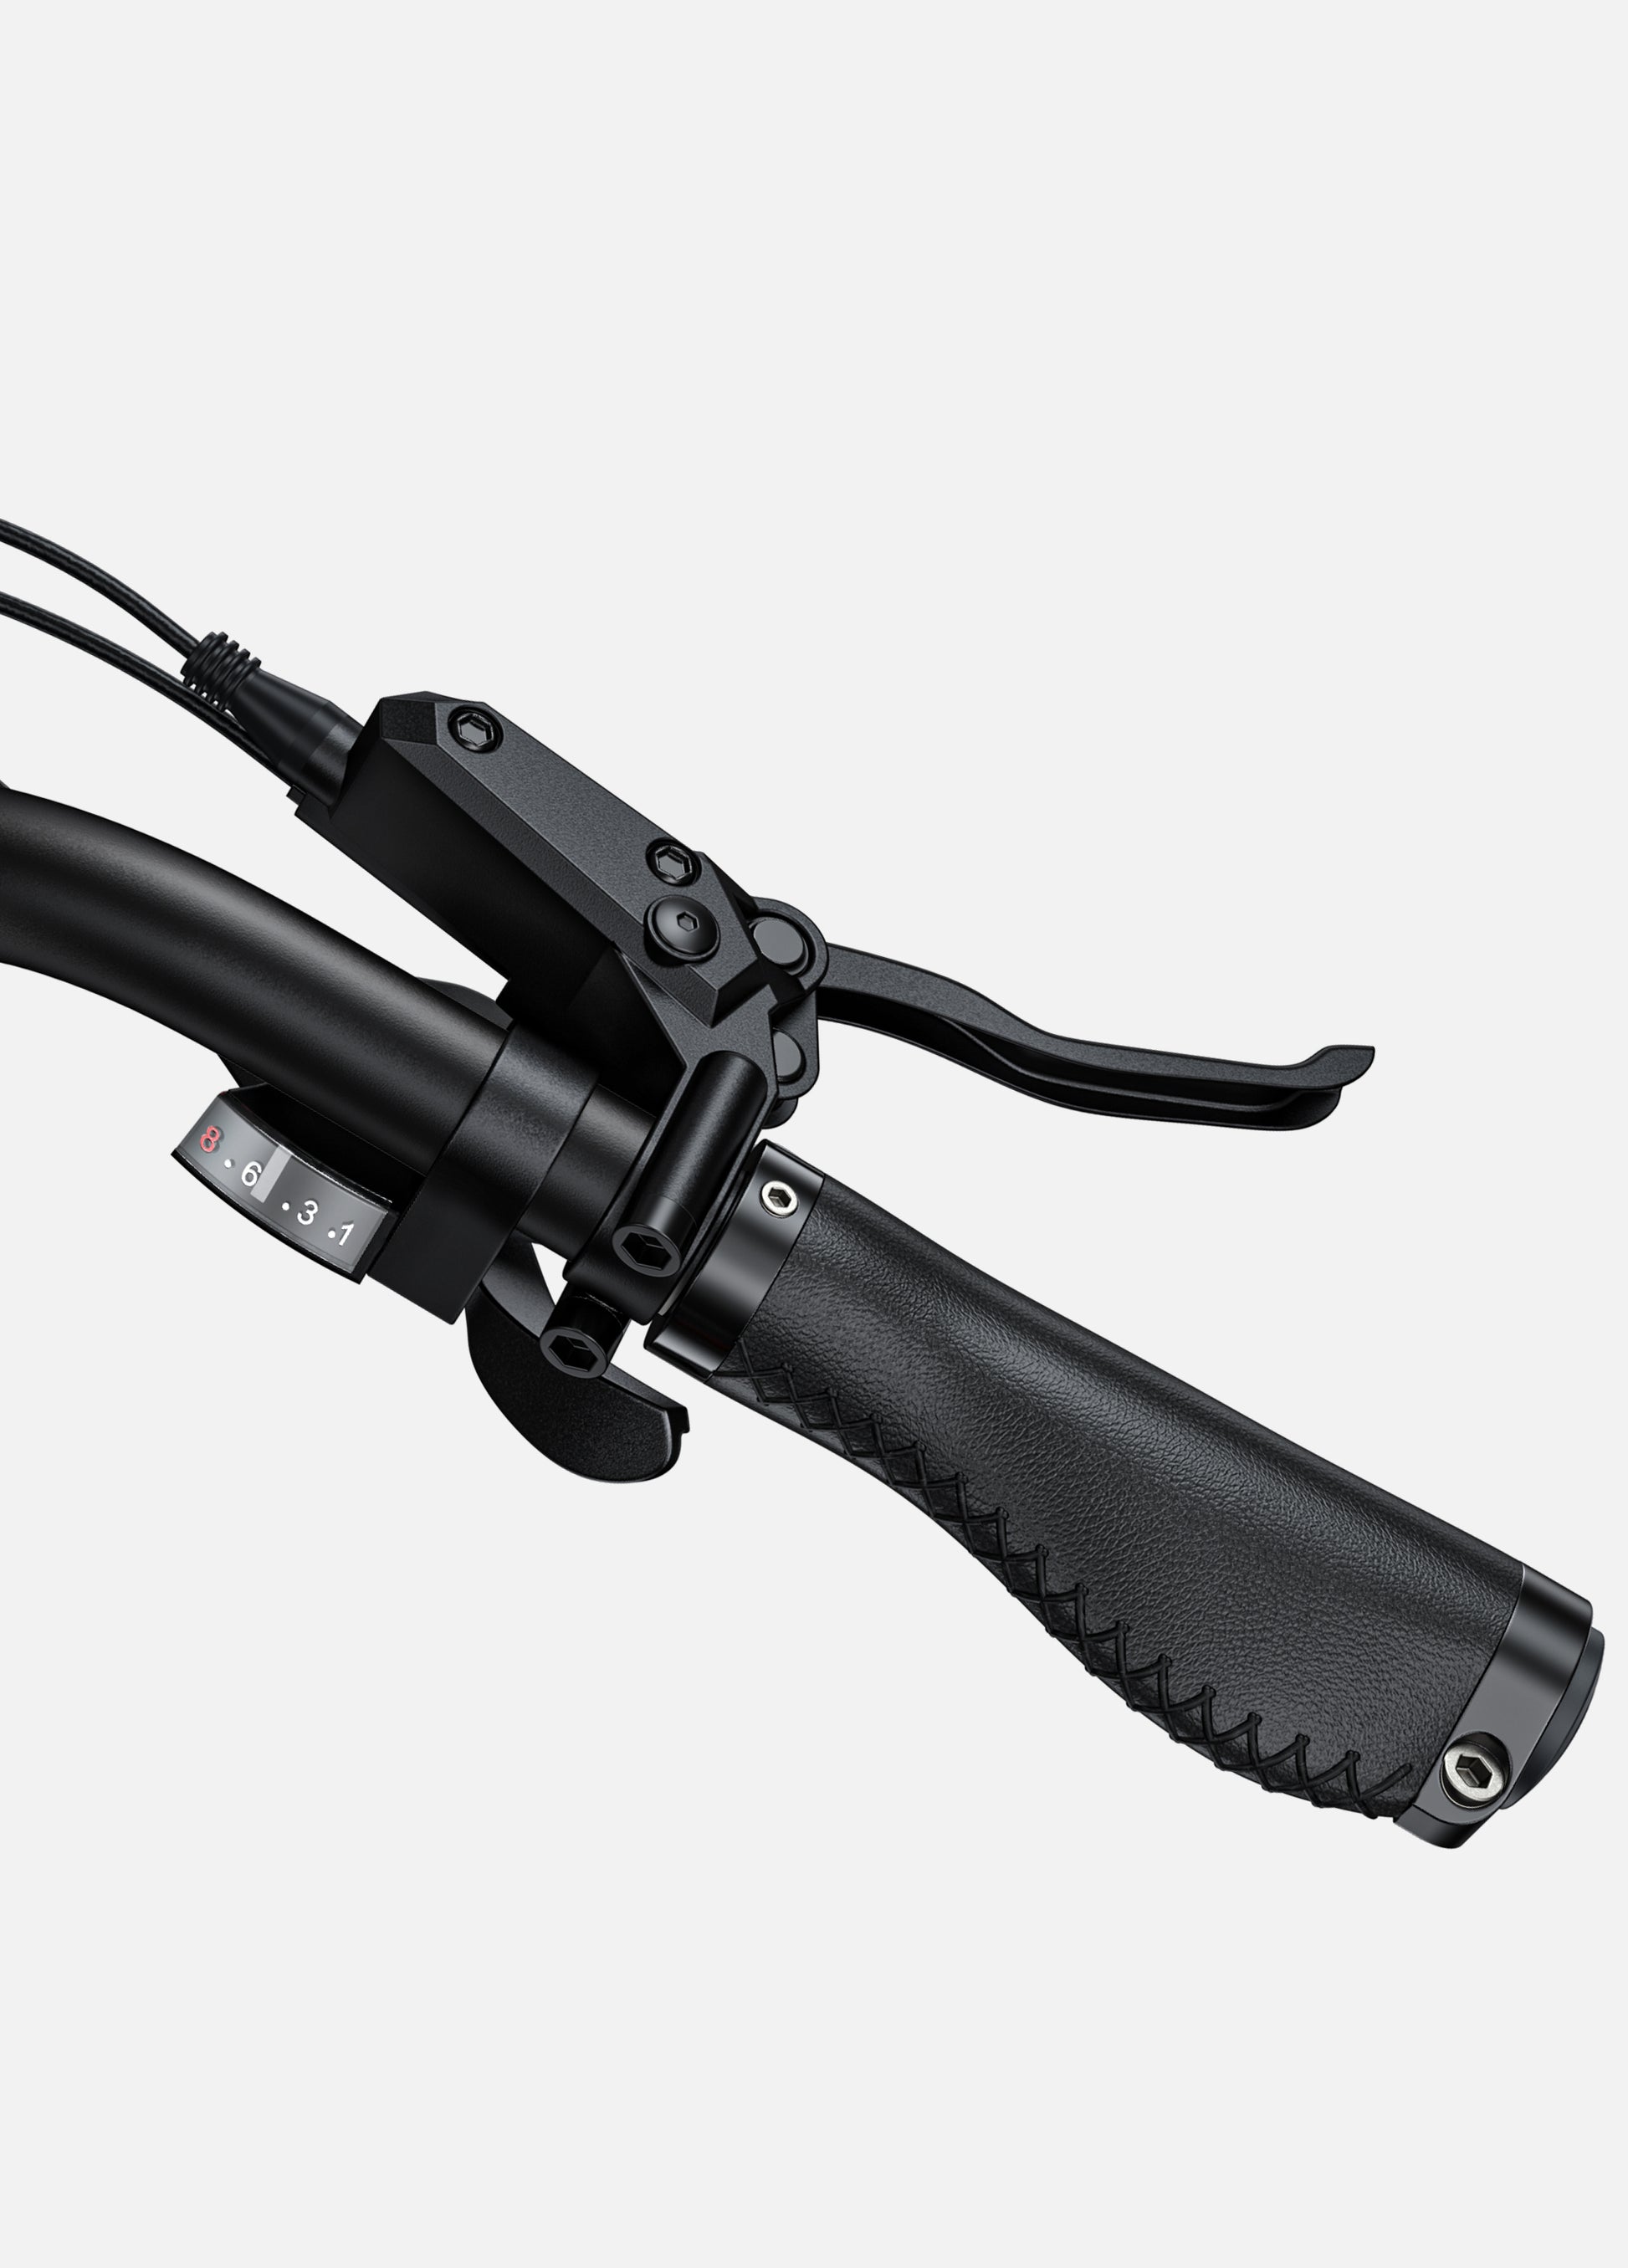 Detailed image of Engwe X26 ebike's handle grip and gear shift mechanism, showcasing ergonomic design.